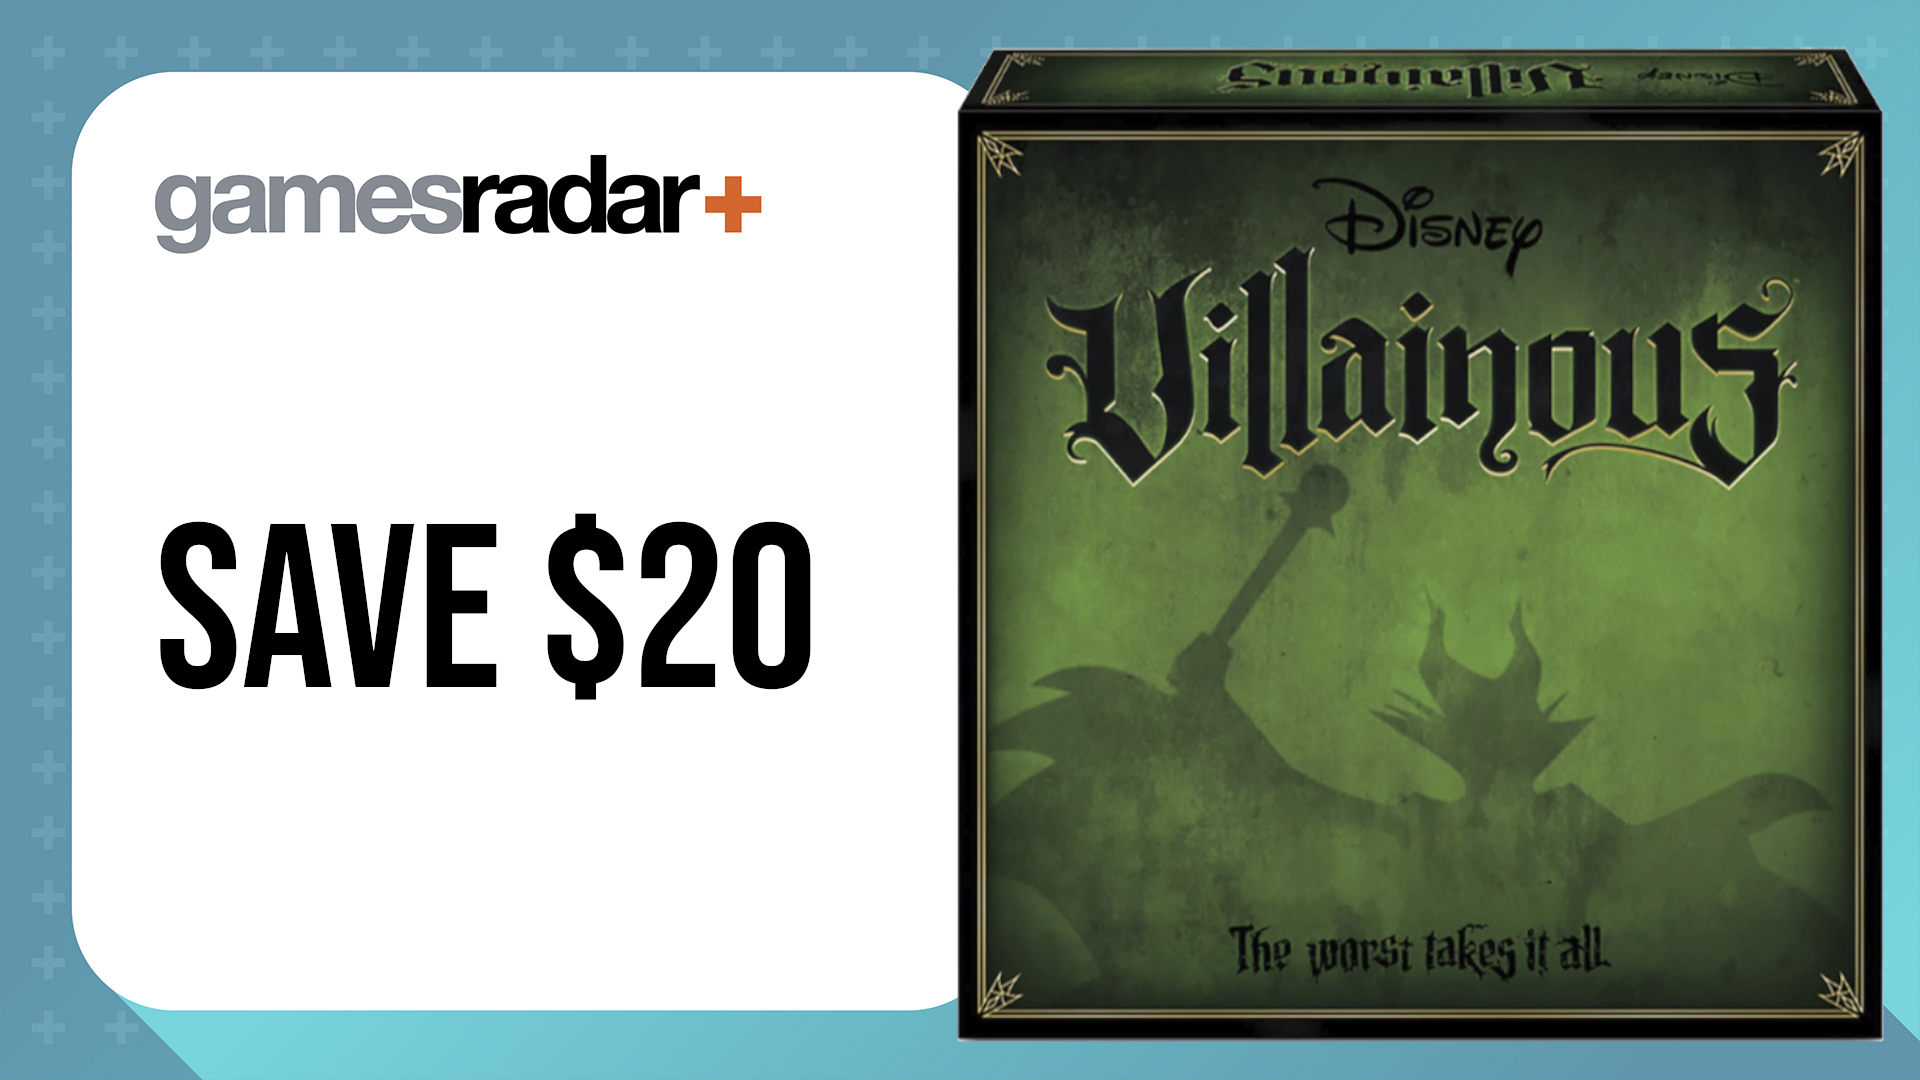 Cyber Monday board game deals with Disney Villainous